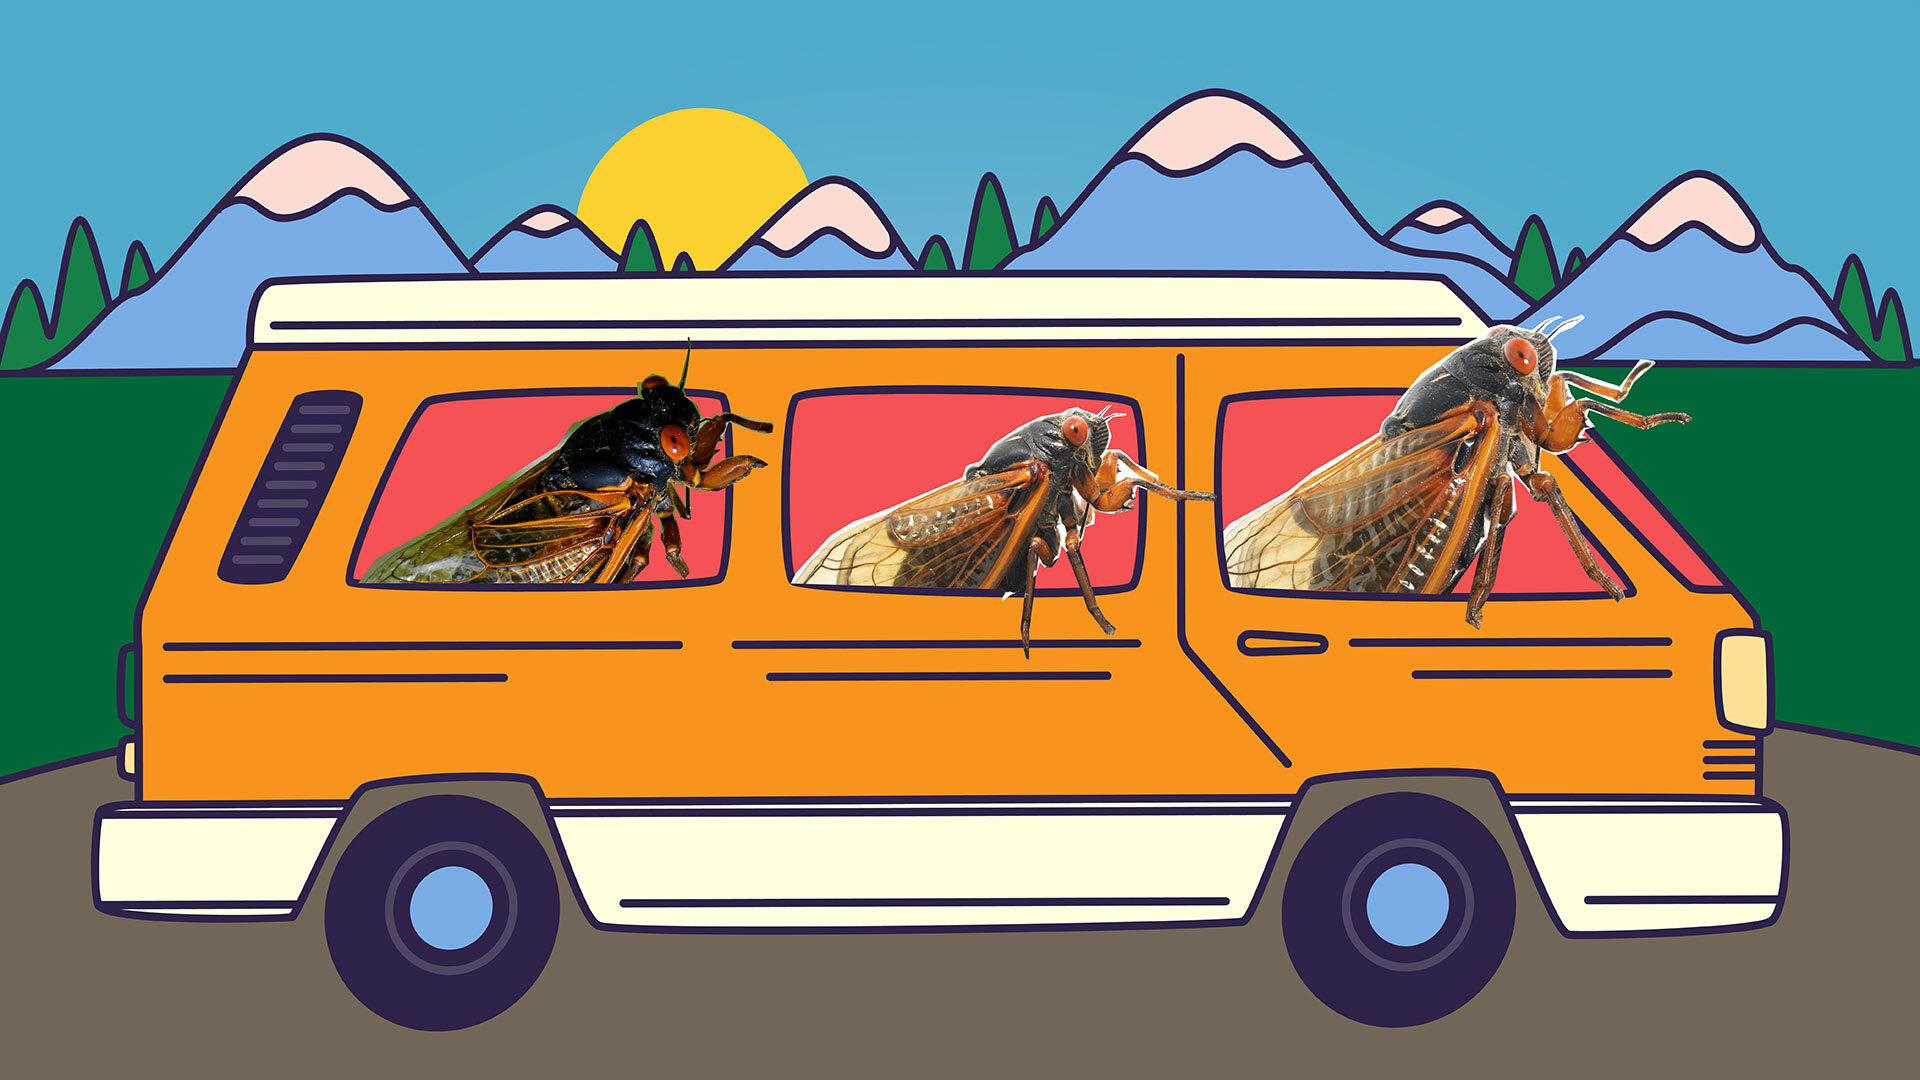 3 cicadas cruise in a van